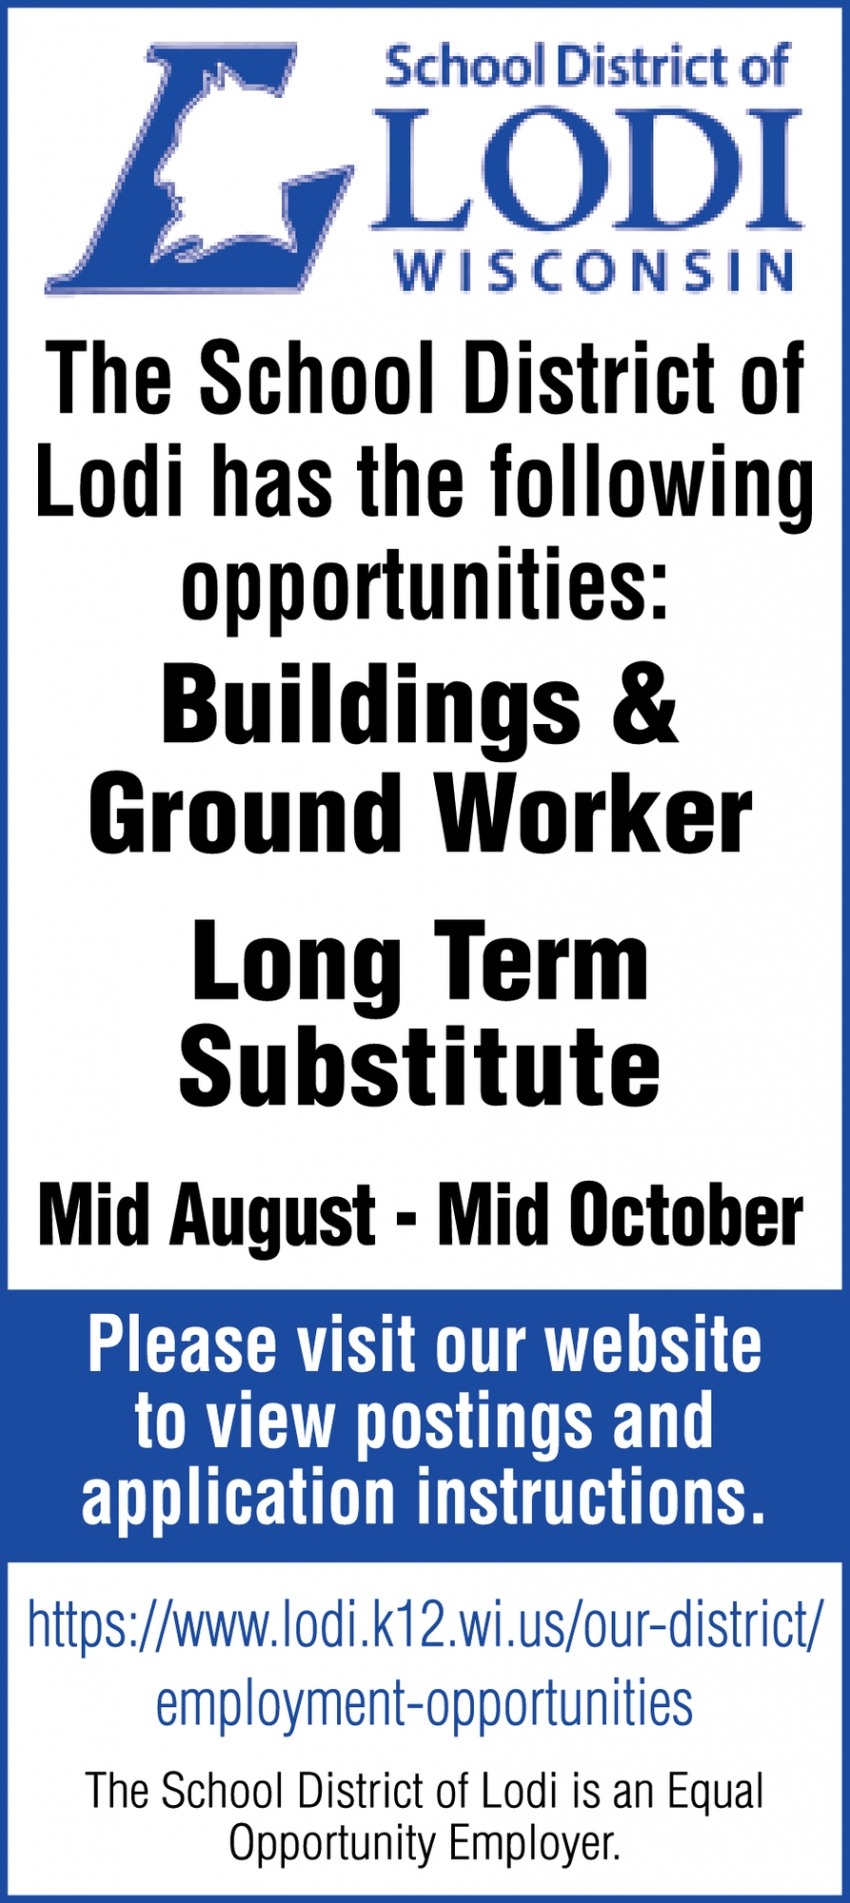 Buildings & Ground Worker